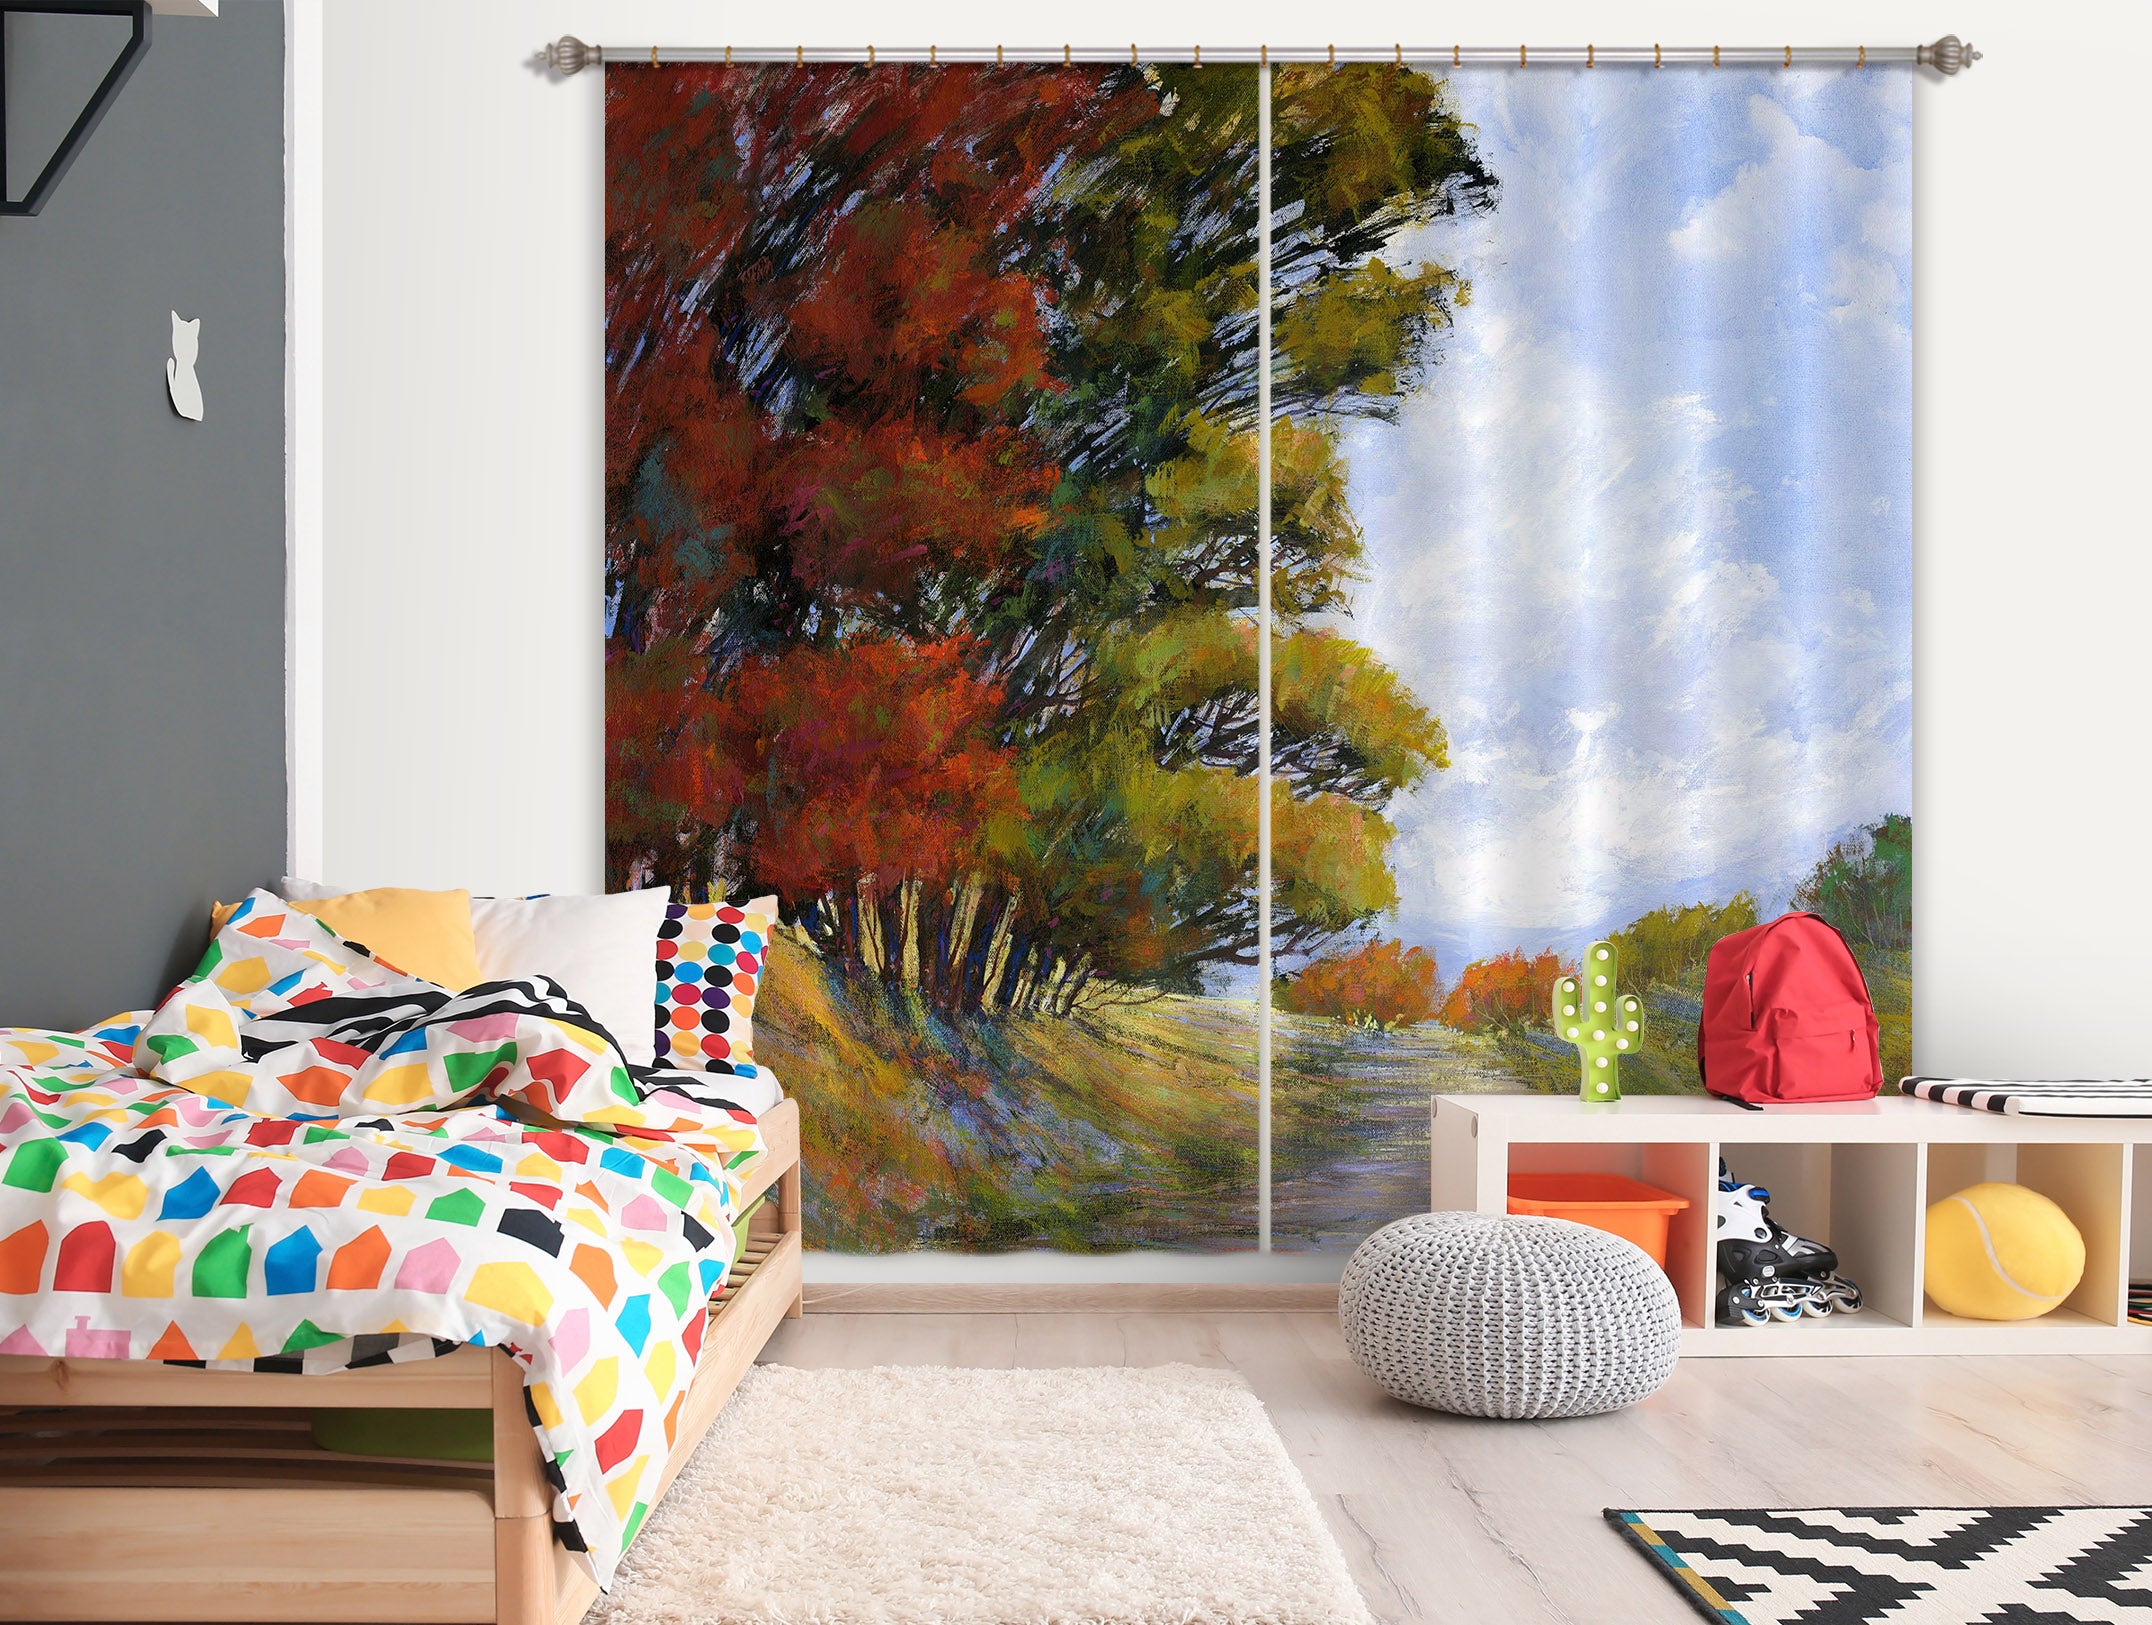 3D Autumn Forest 216 Michael Tienhaara Curtain Curtains Drapes